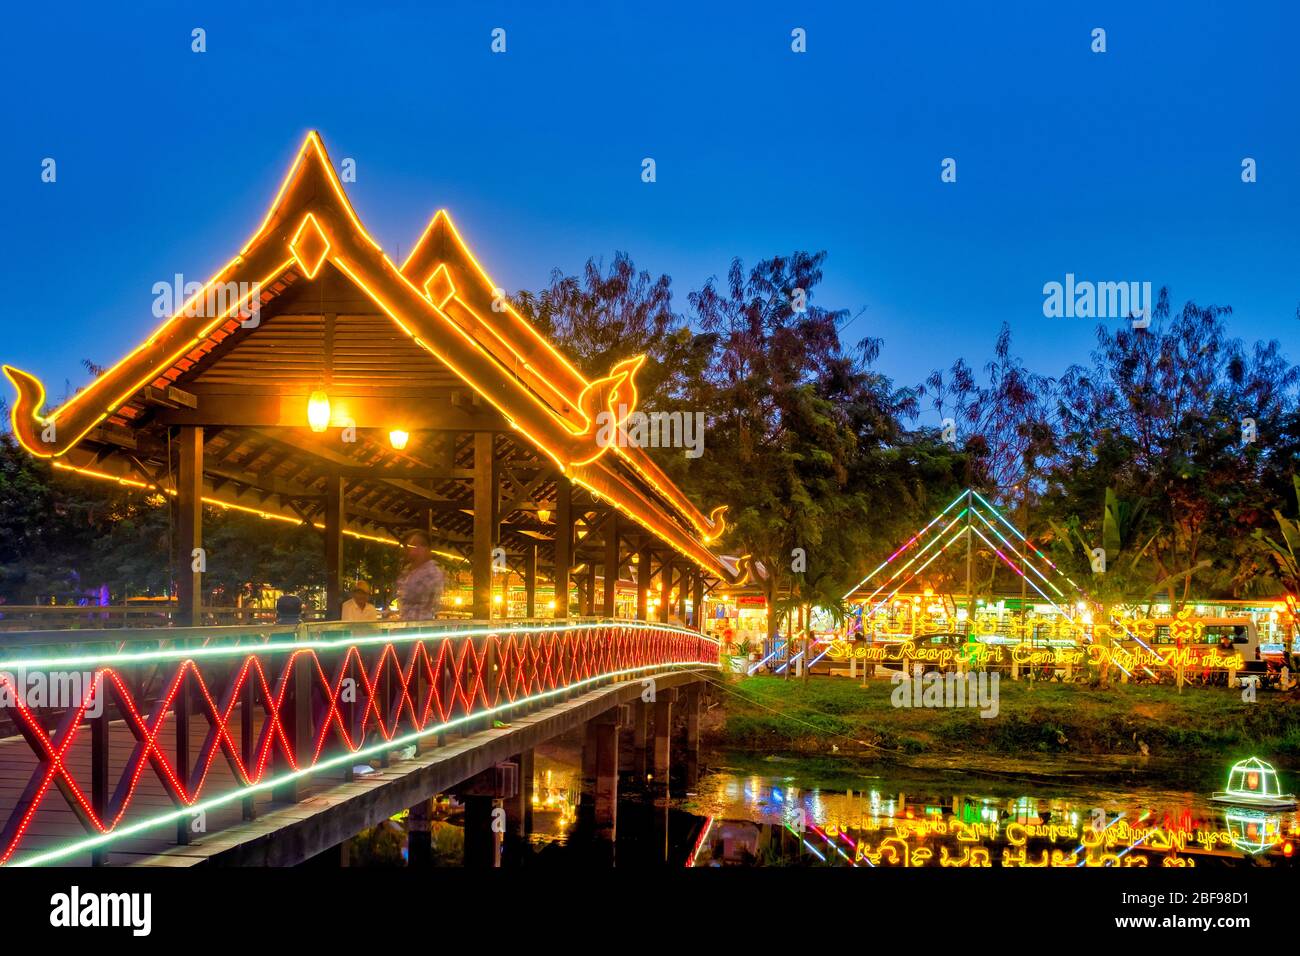 Illuminated bridge to the Siem Reap Art Center Night Market, Siem Reap, Cambodia Stock Photo